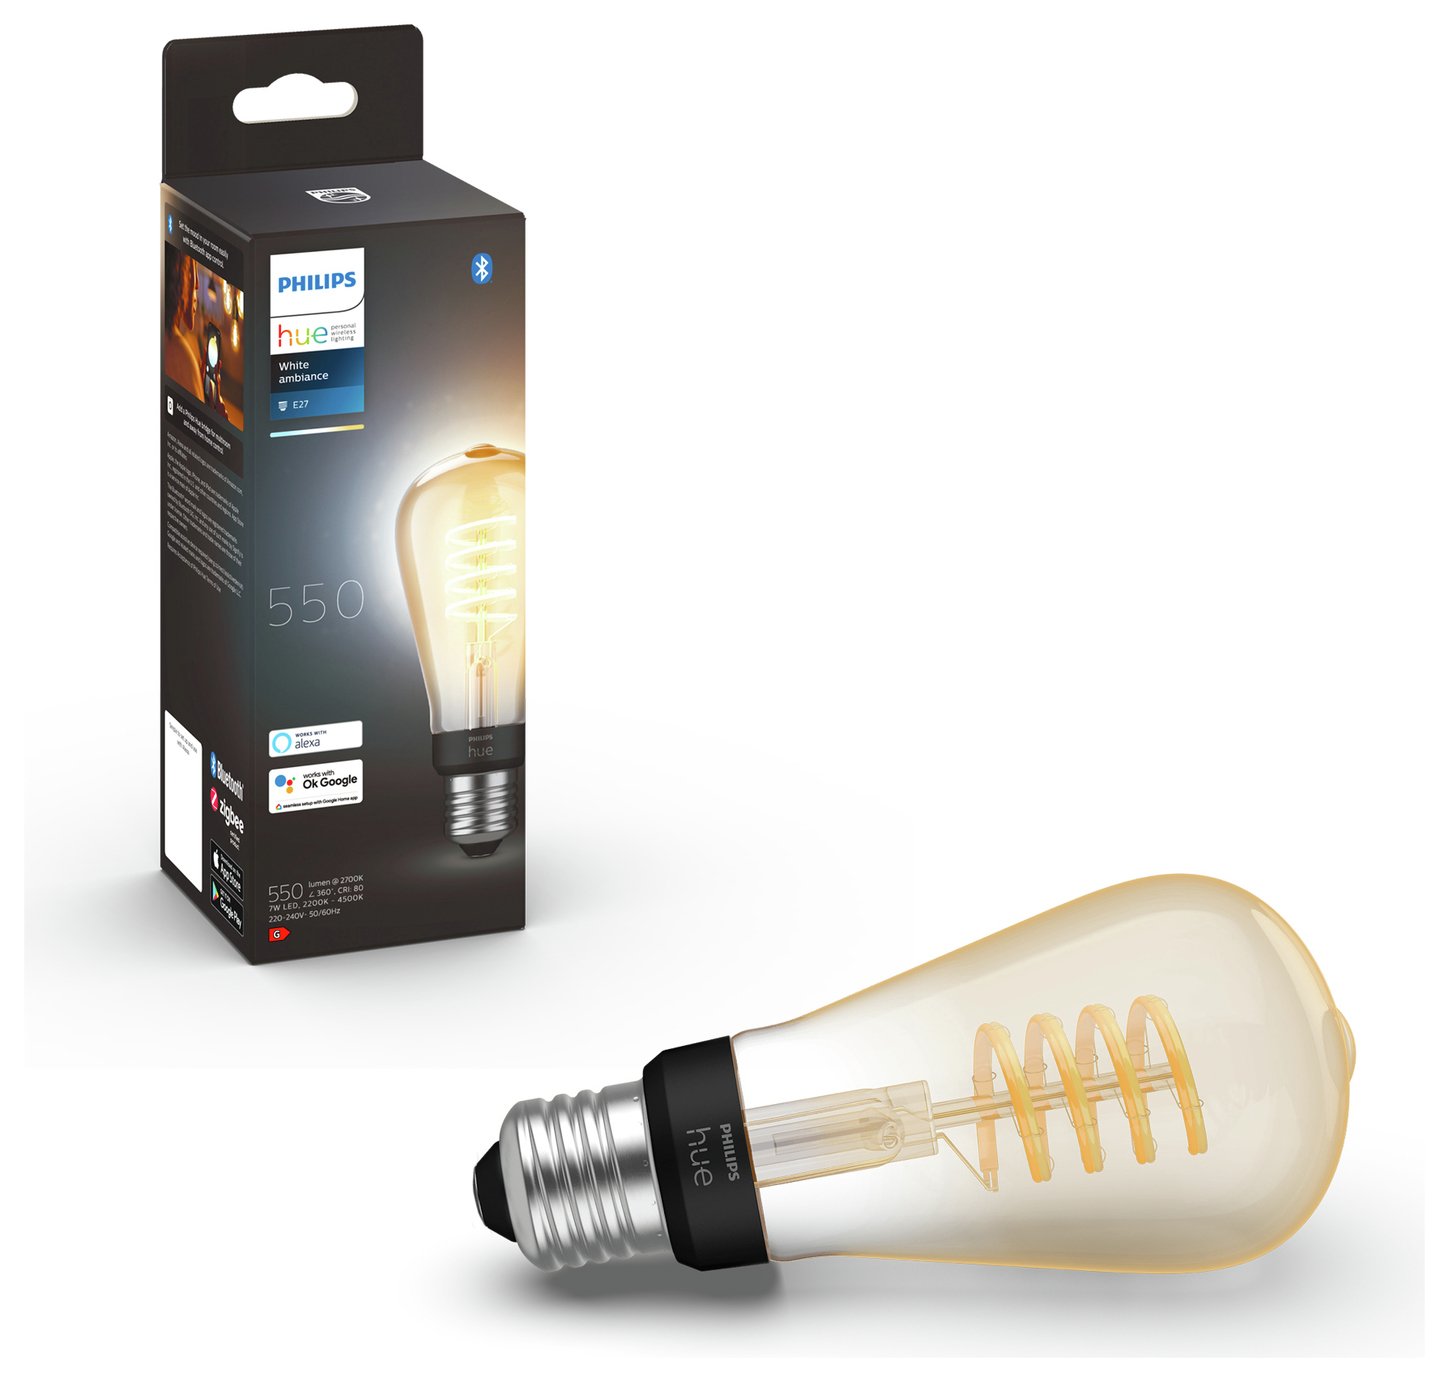 Philips Hue E27 White Ambiance Smart Bulb With Bluetooth